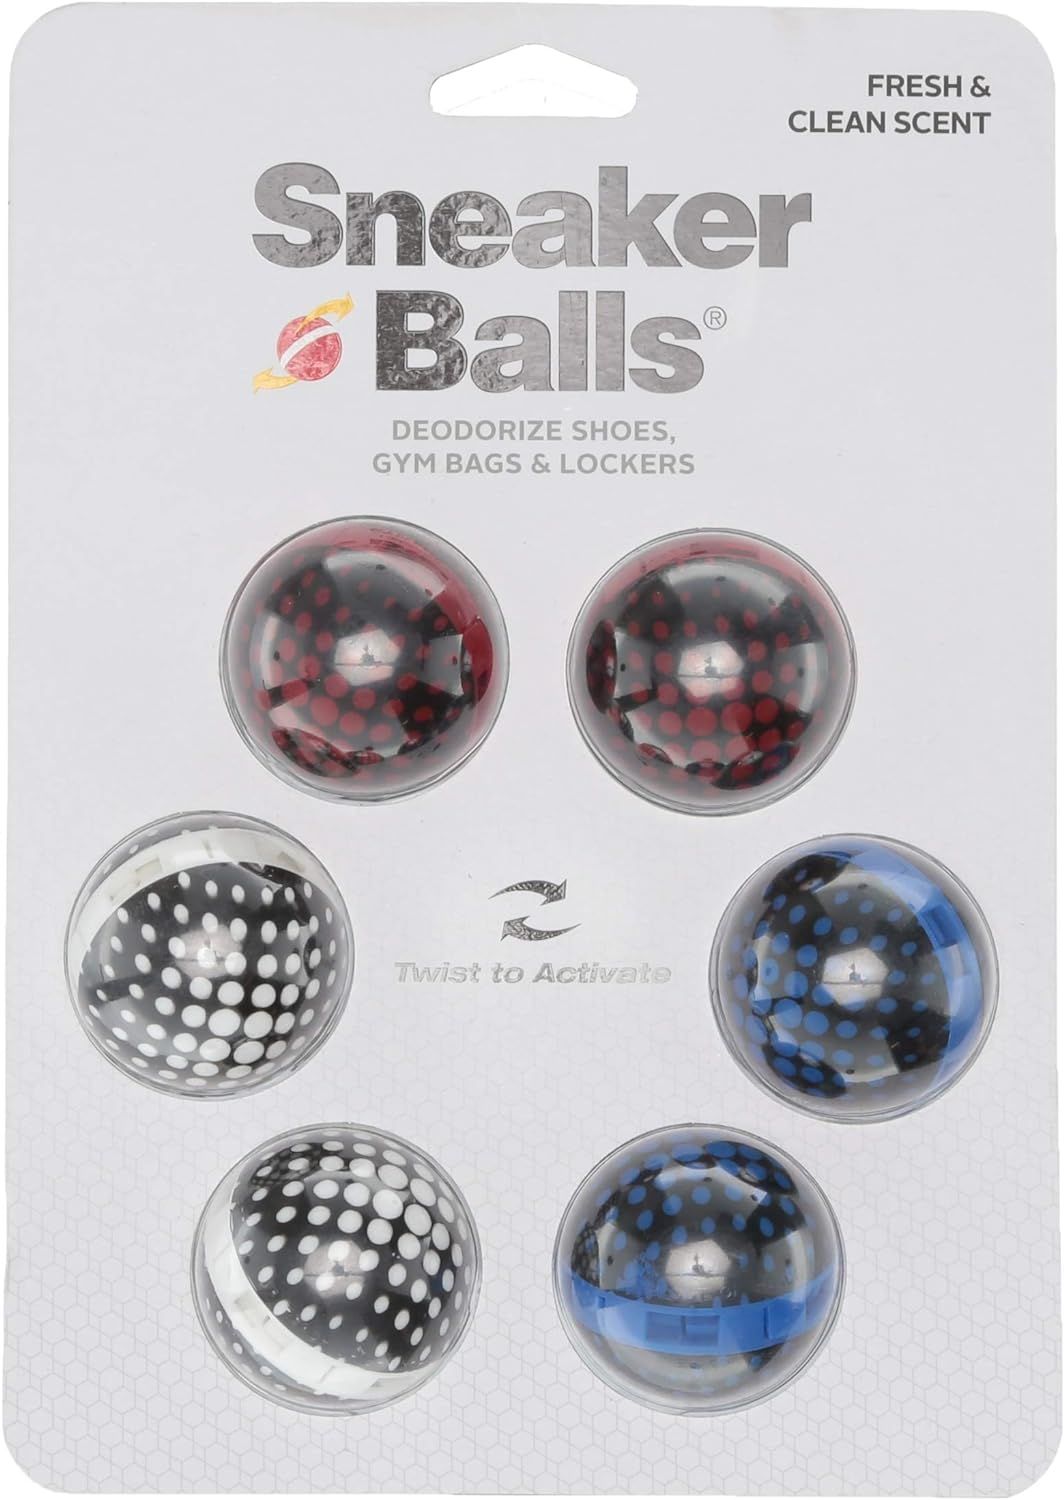 Sof Sole Sneaker Balls Shoe, Gym Bag, and Locker Deodorizer, 6 Pack | Amazon (US)